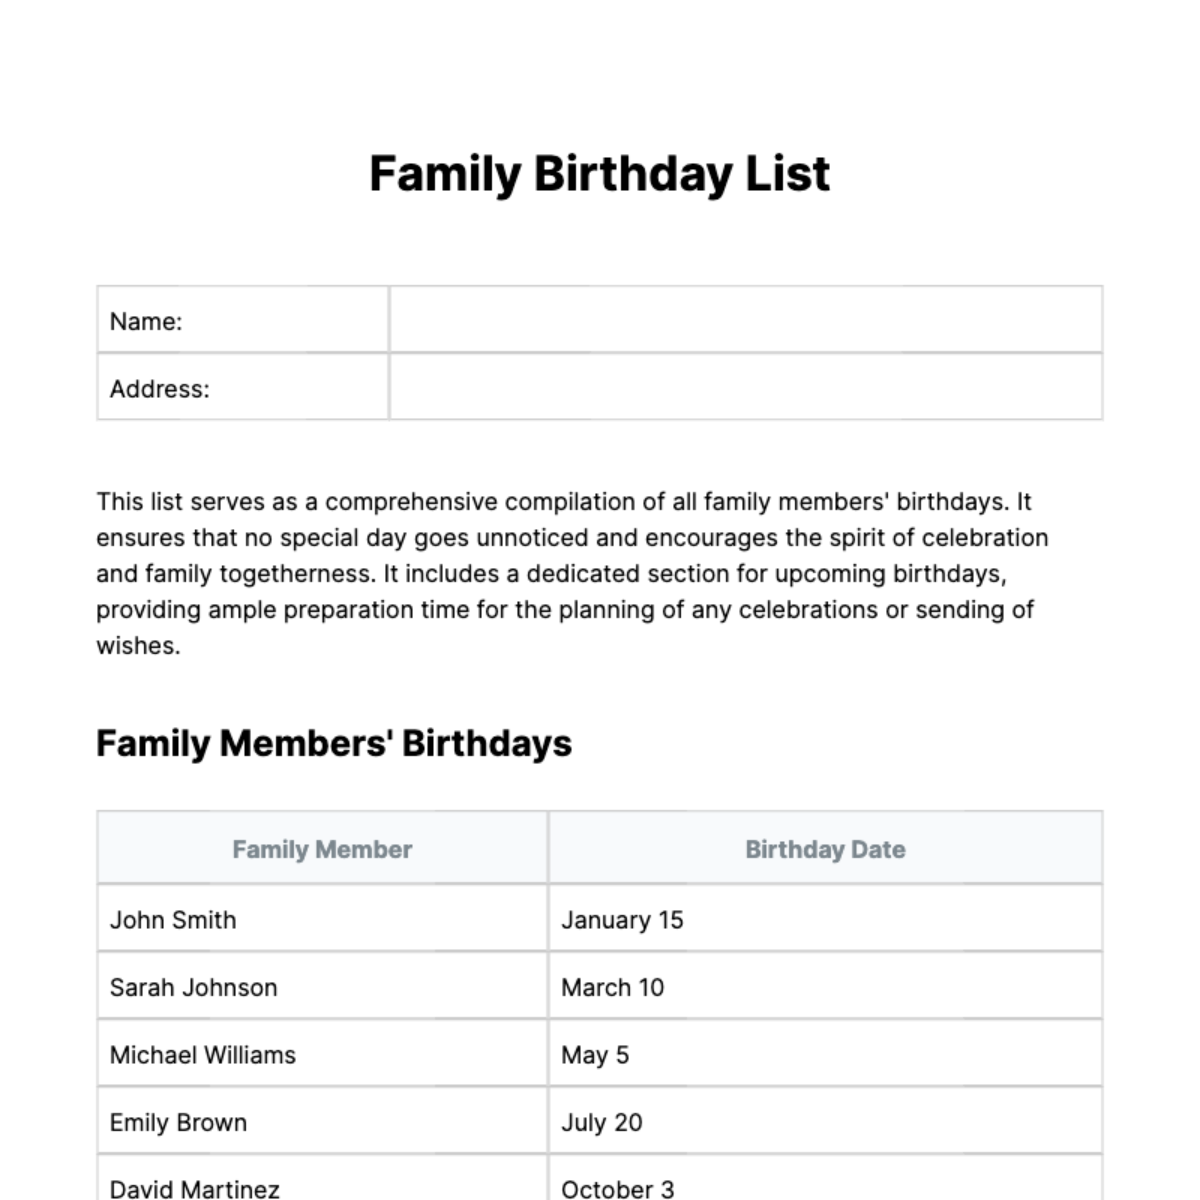 Family Birthday List Template